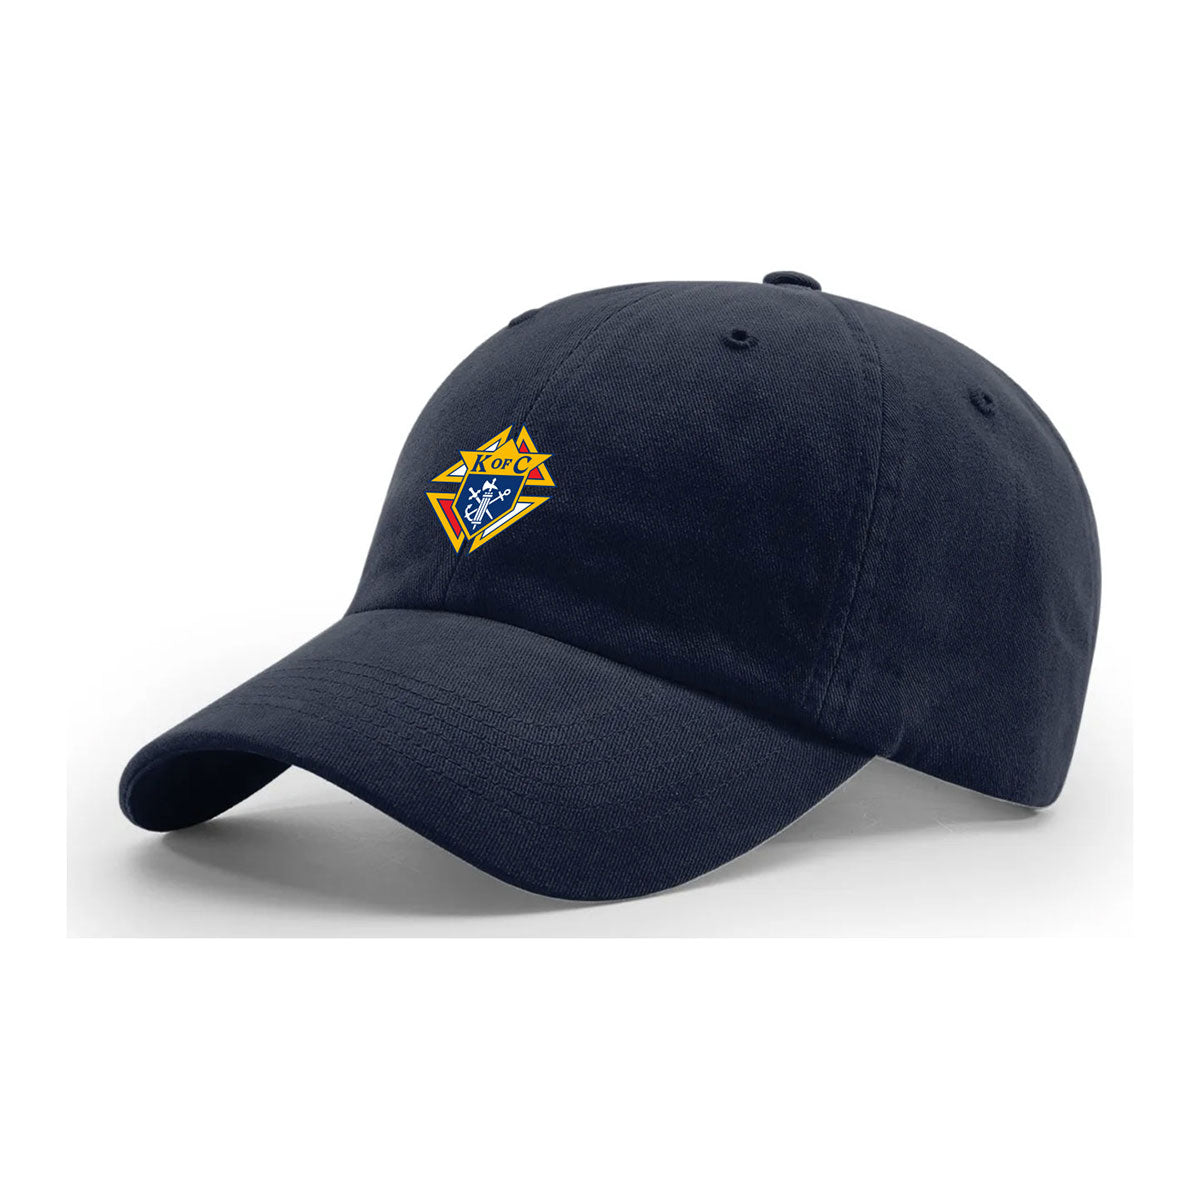 Richardson Casual Twill Hat - KofC Emblem